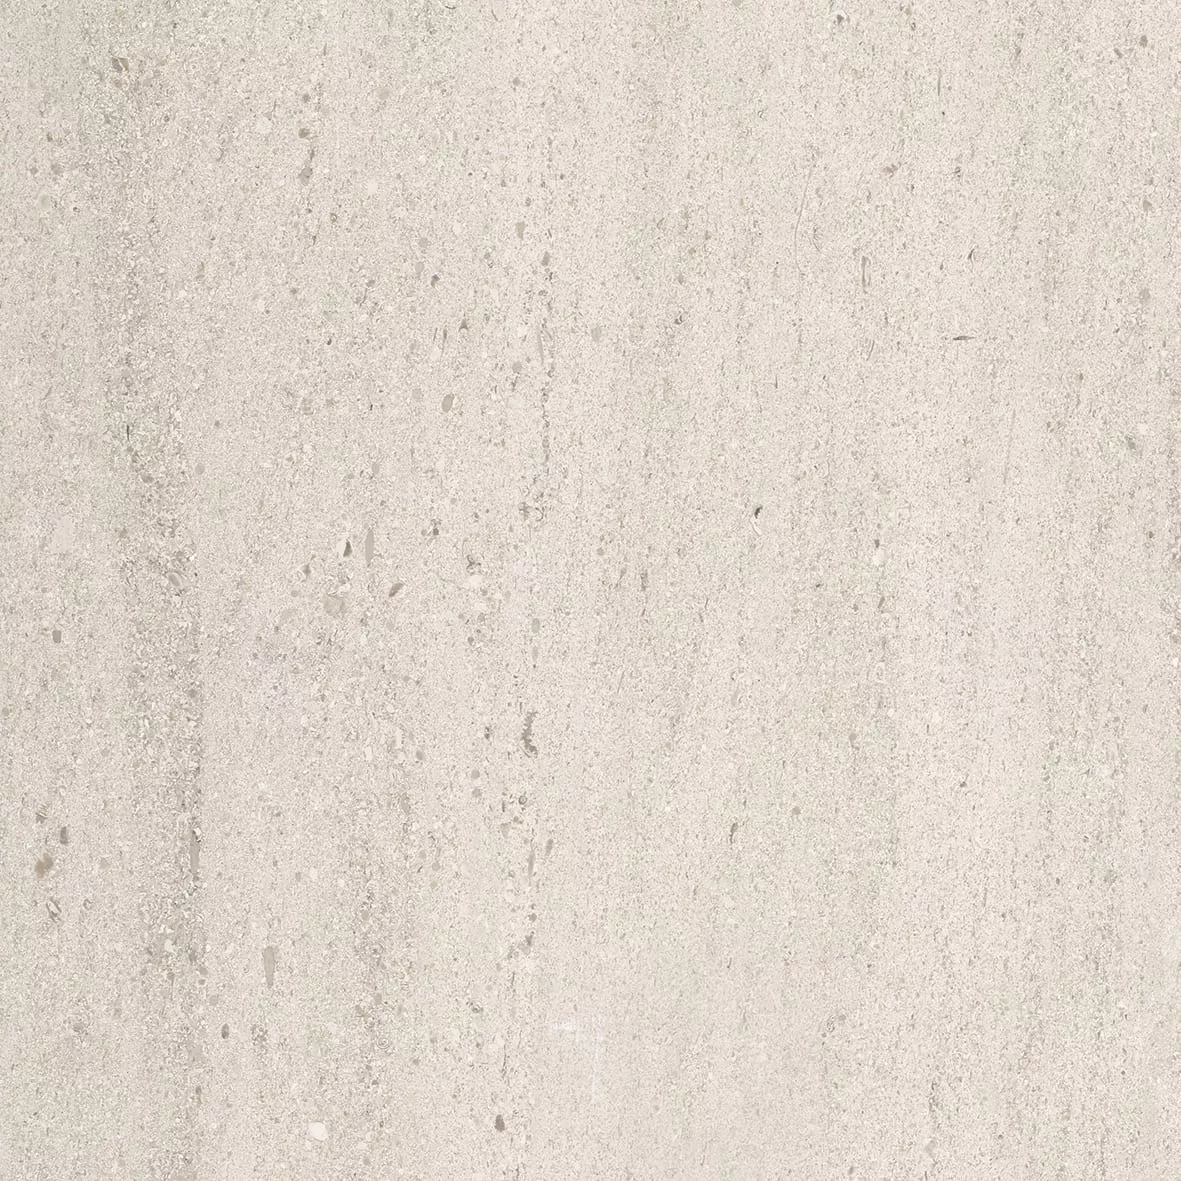 Gresie portelanata, 59×59 cm, bej, Malcom, Cesarom